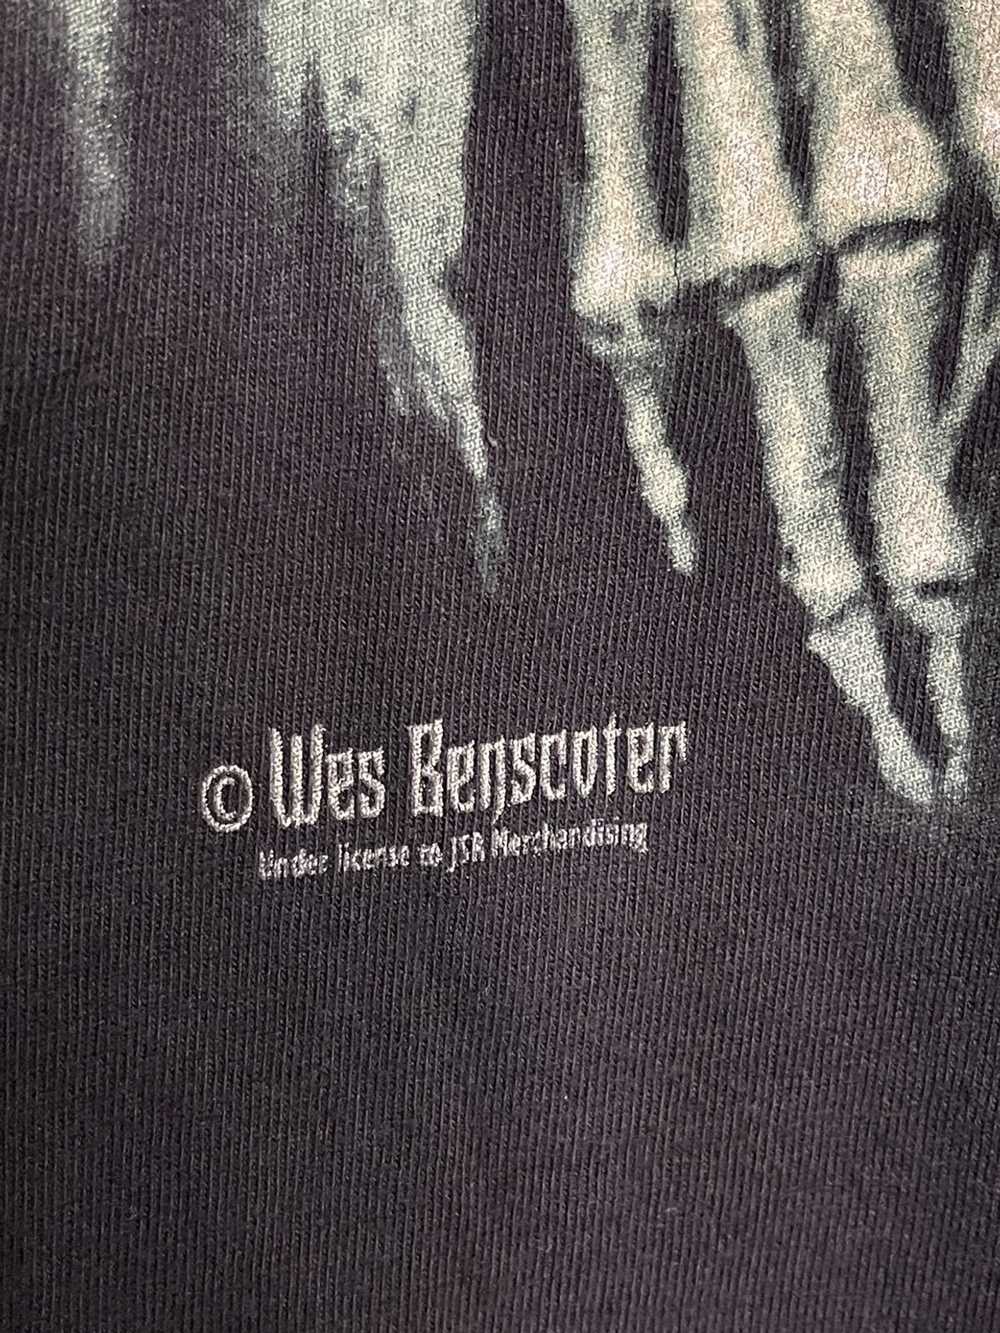 Art × Vintage Vintage Wes Benscoter Art T-Shirt - image 3